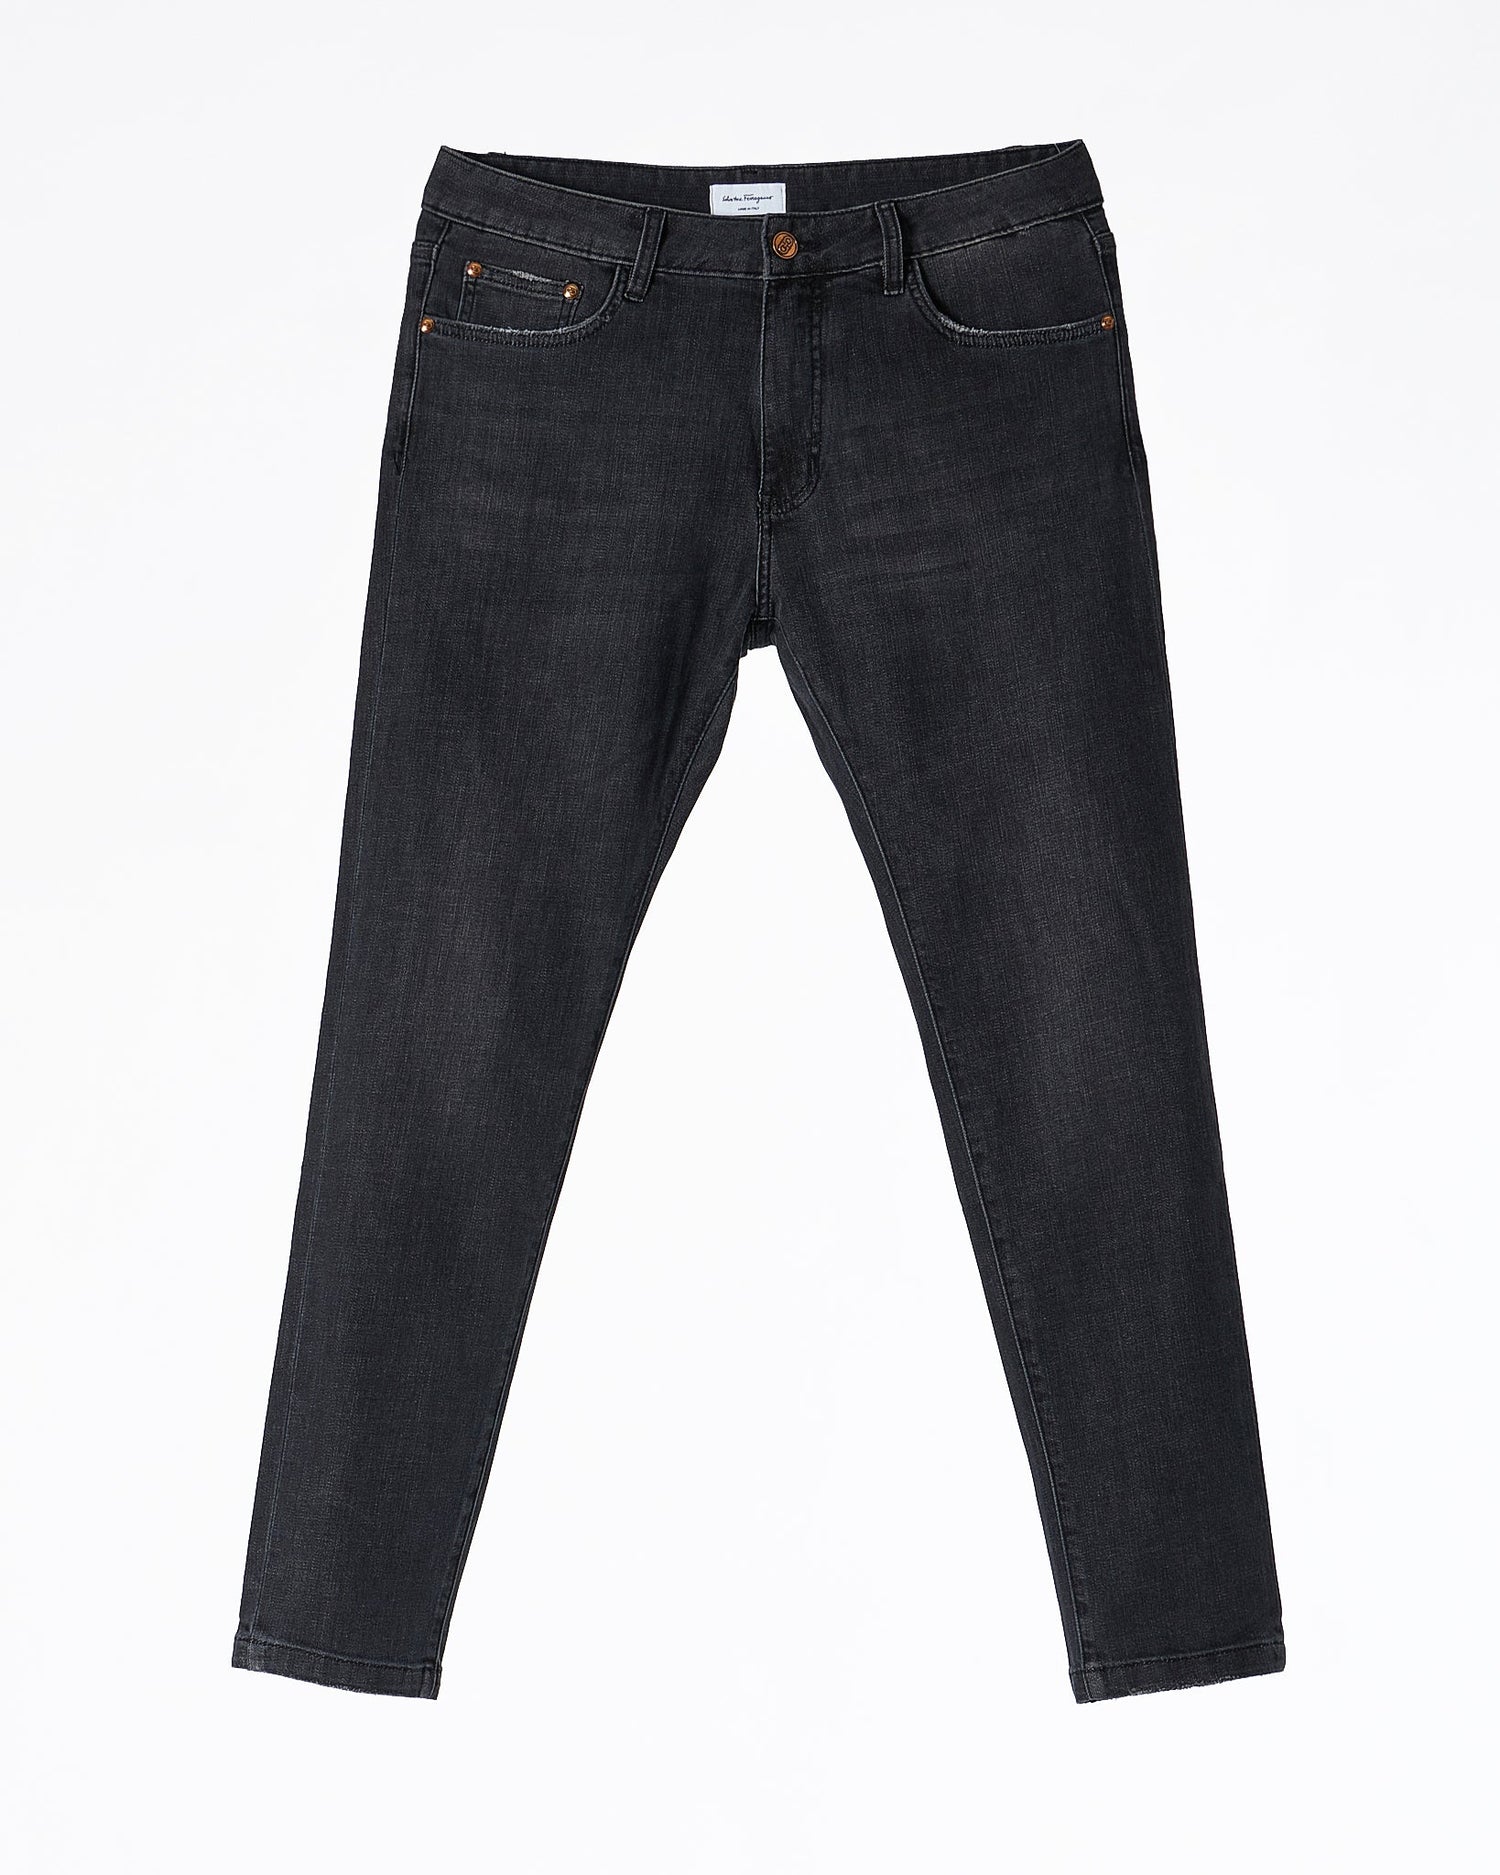 MOI OUTFIT-FR Slim Fit Men Jeans 68.90